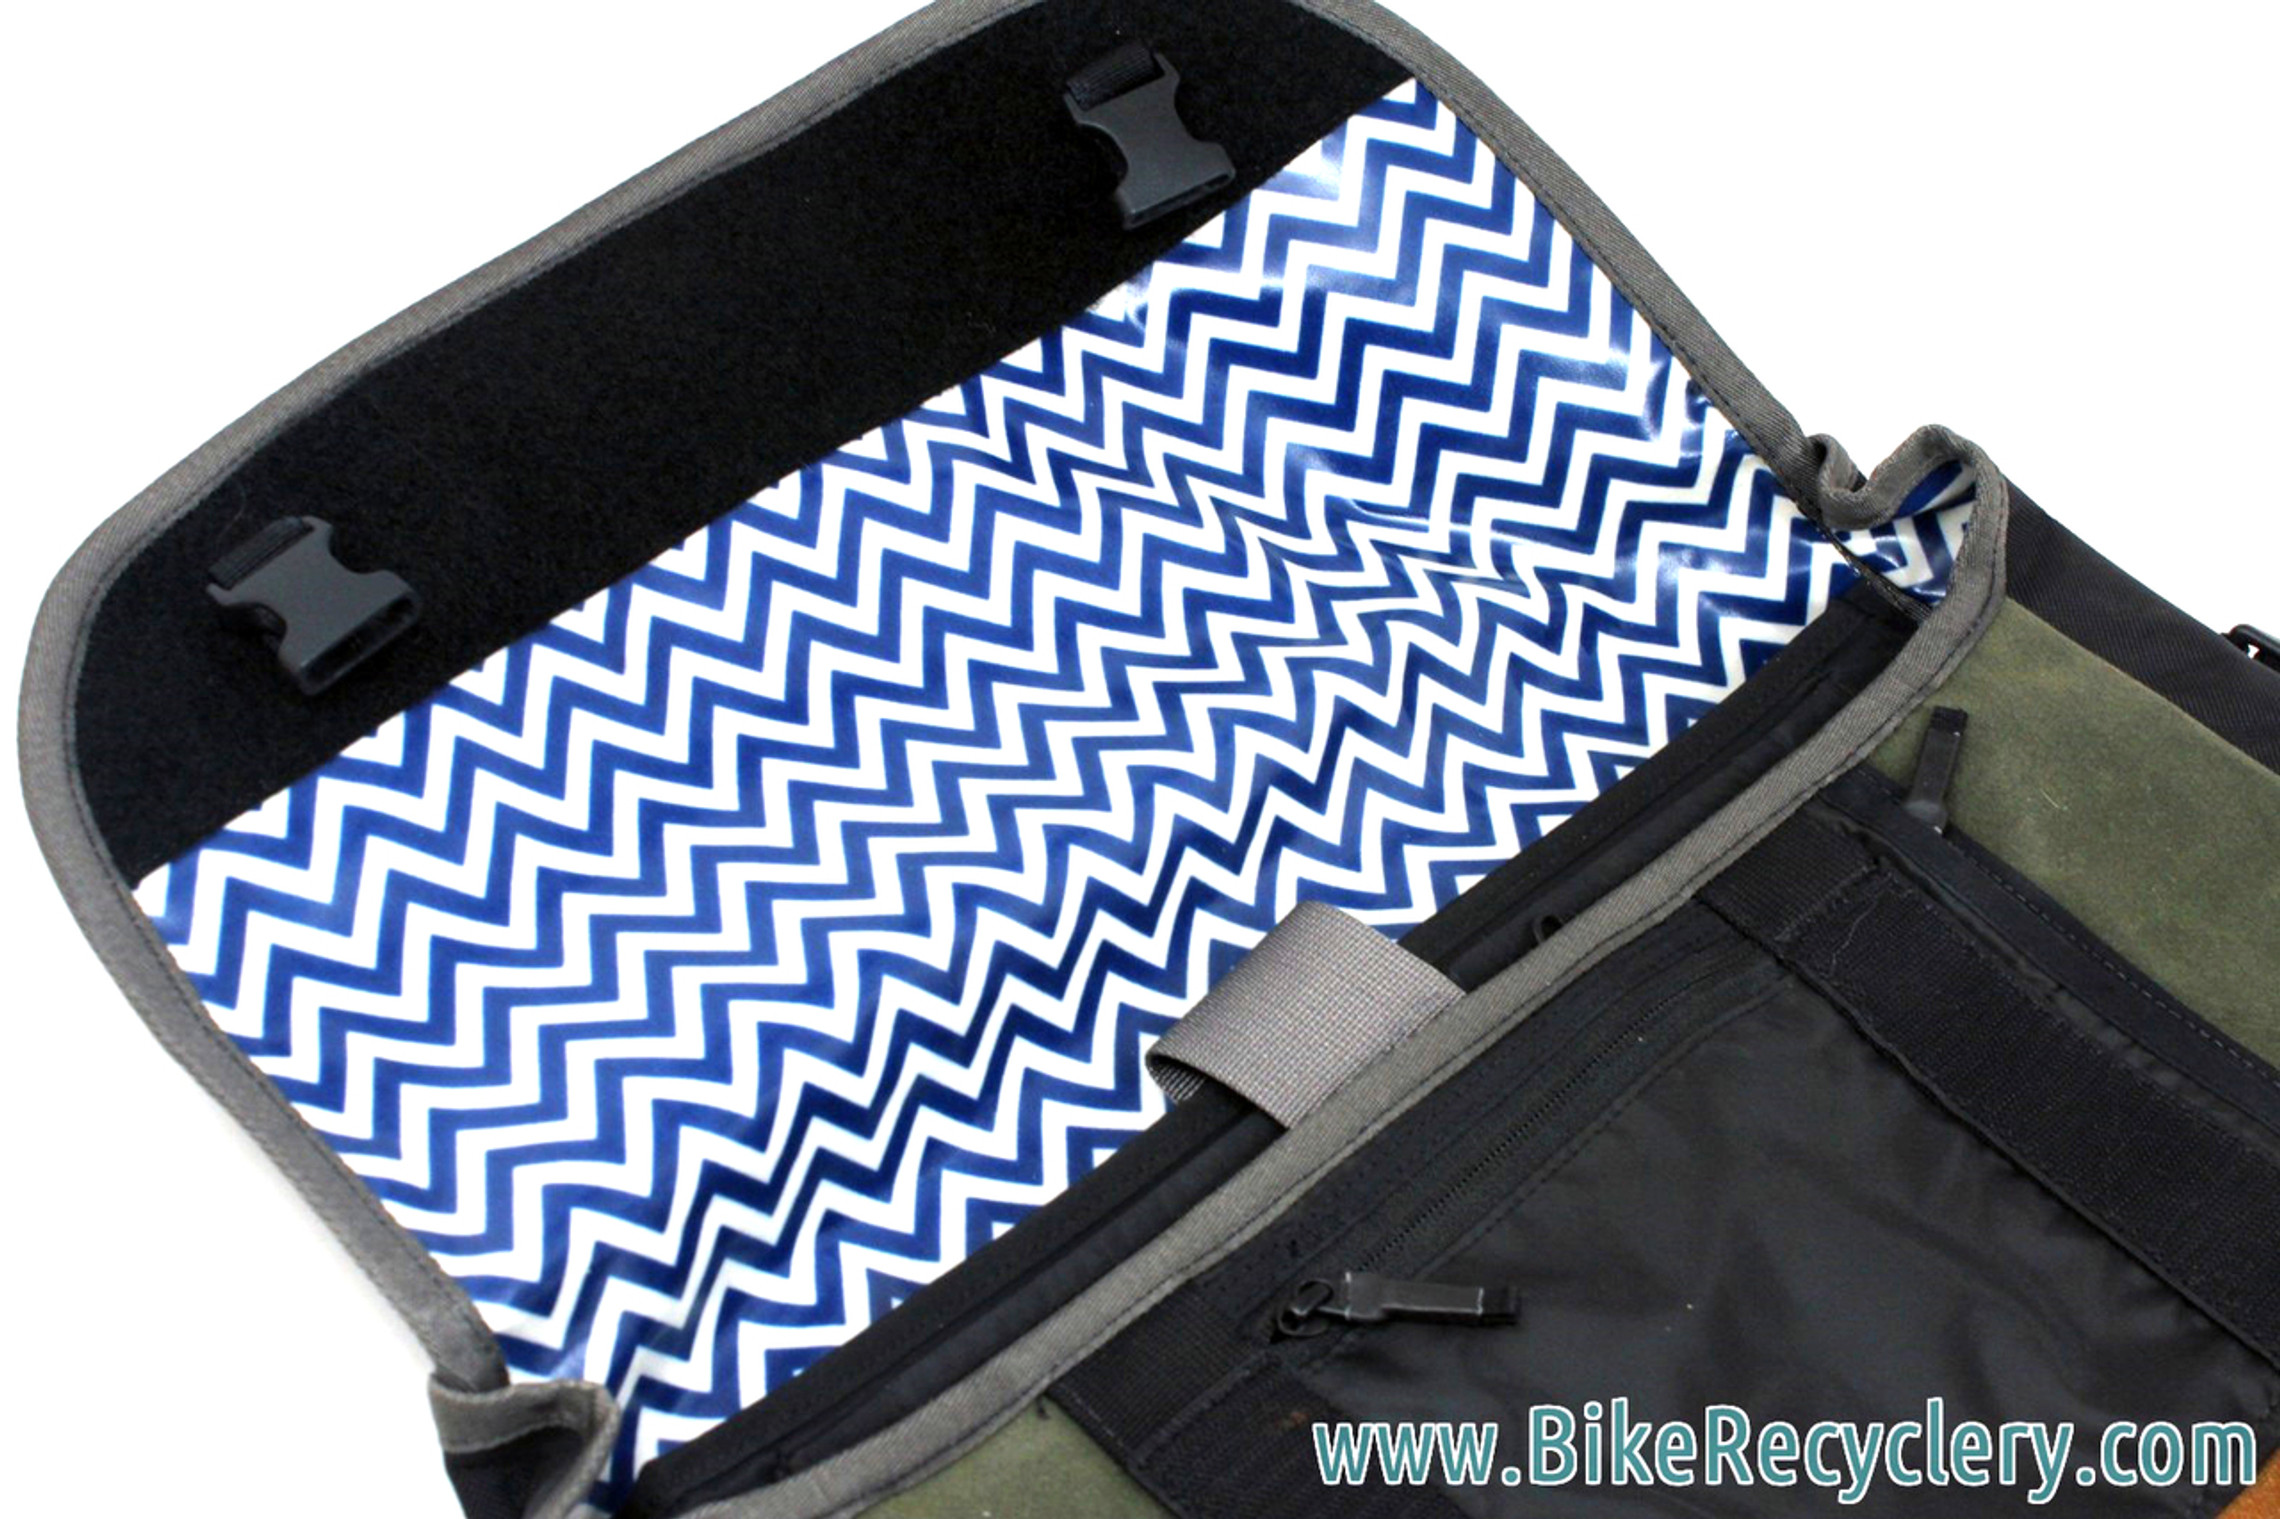 Buy the Blue/Green Timbuk2 Laptop Messenger Bag